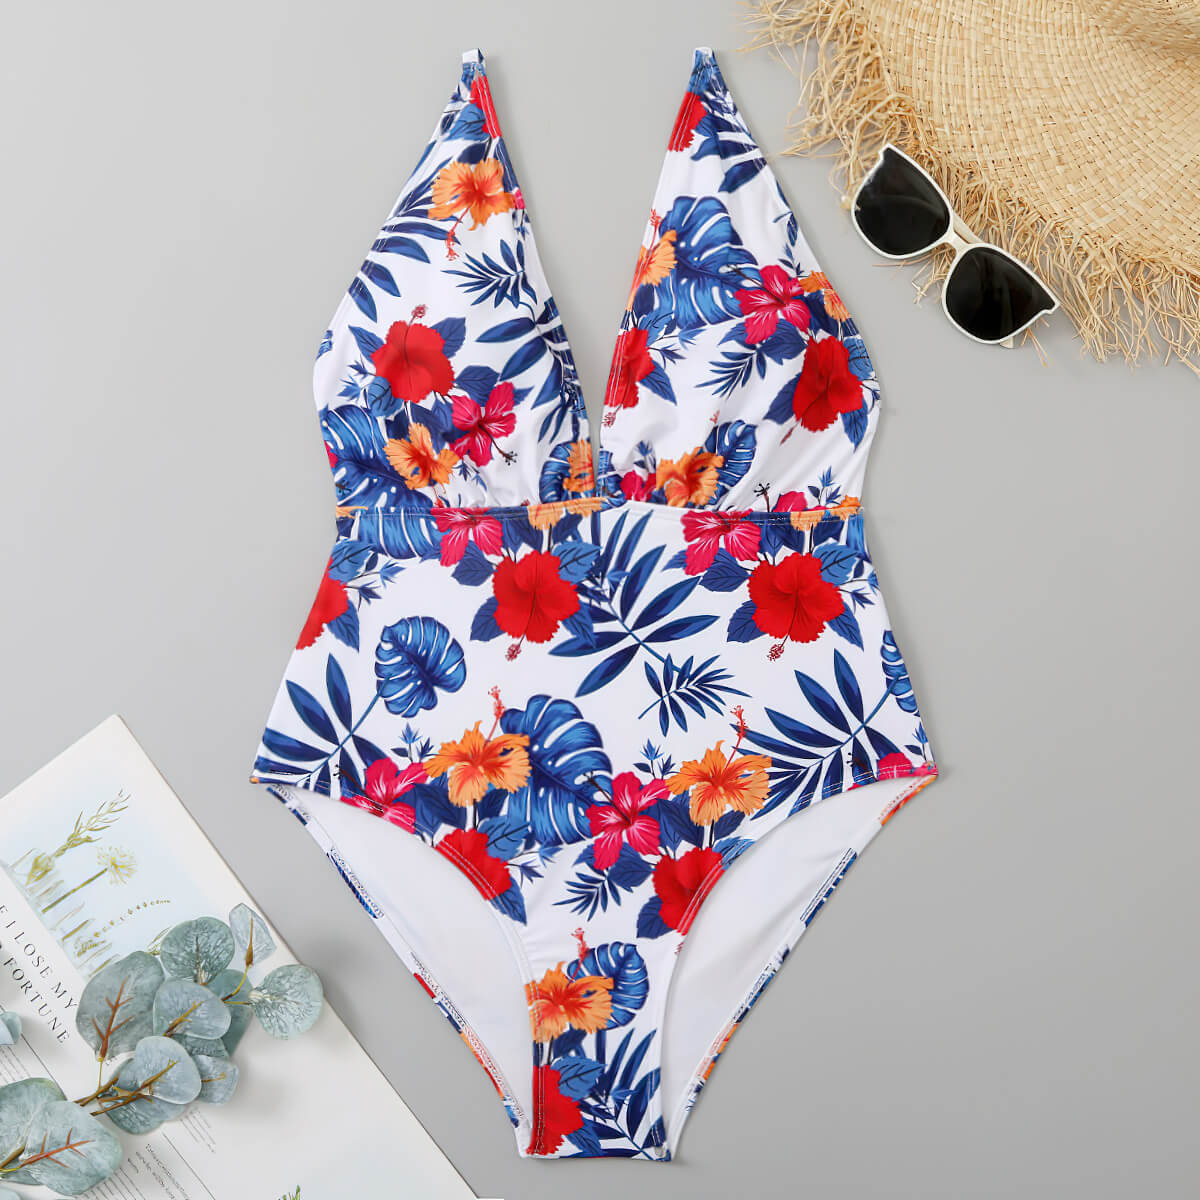 Plus Size Cheeky Swimsuit Flower Print